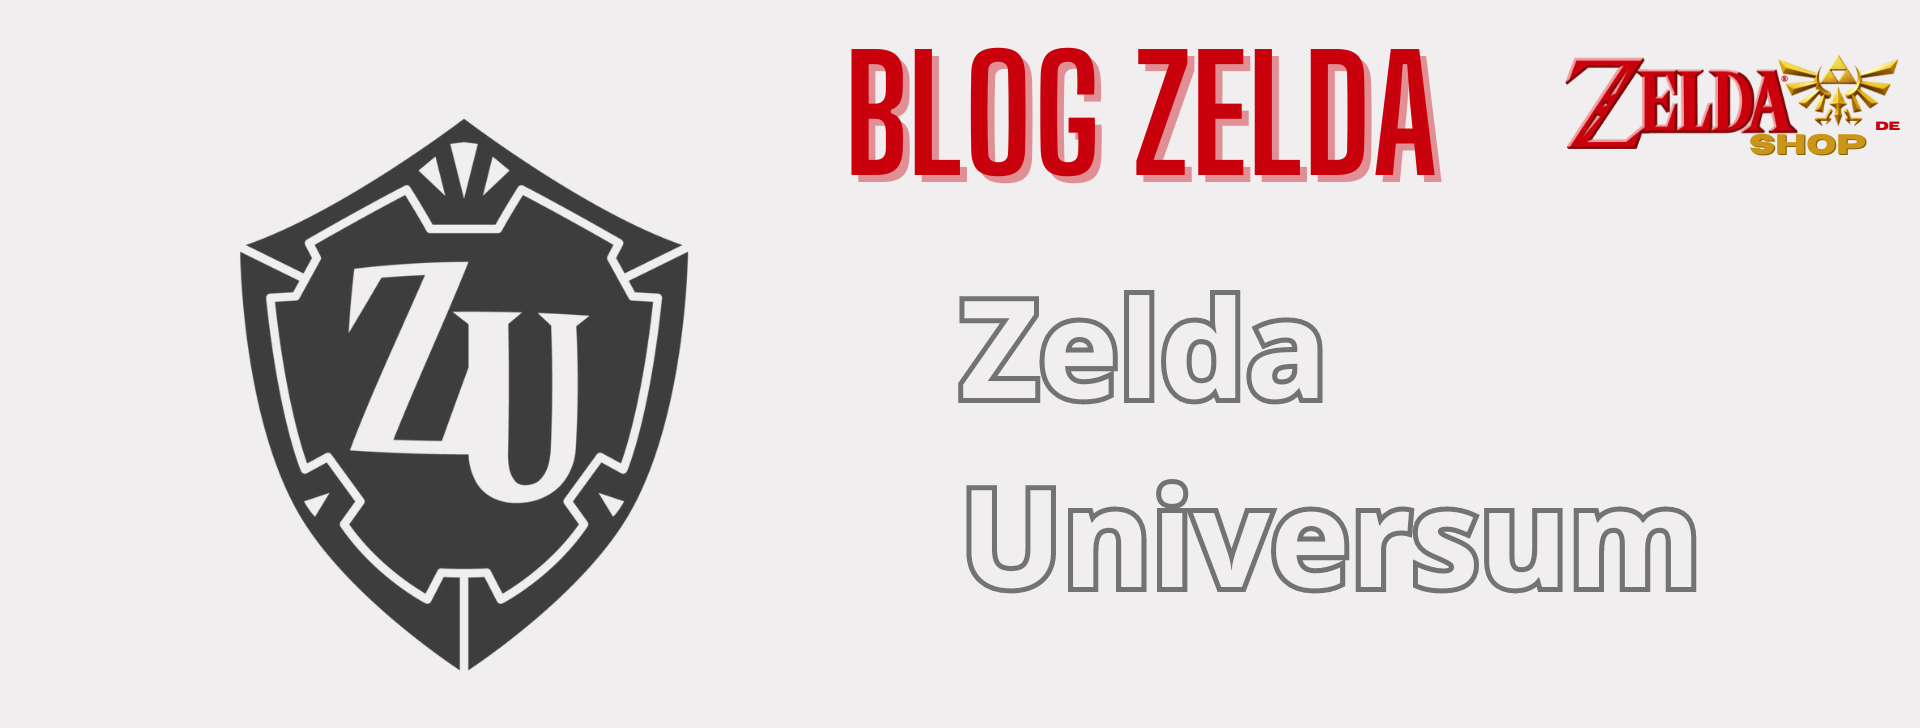 Blog Zelda Universum